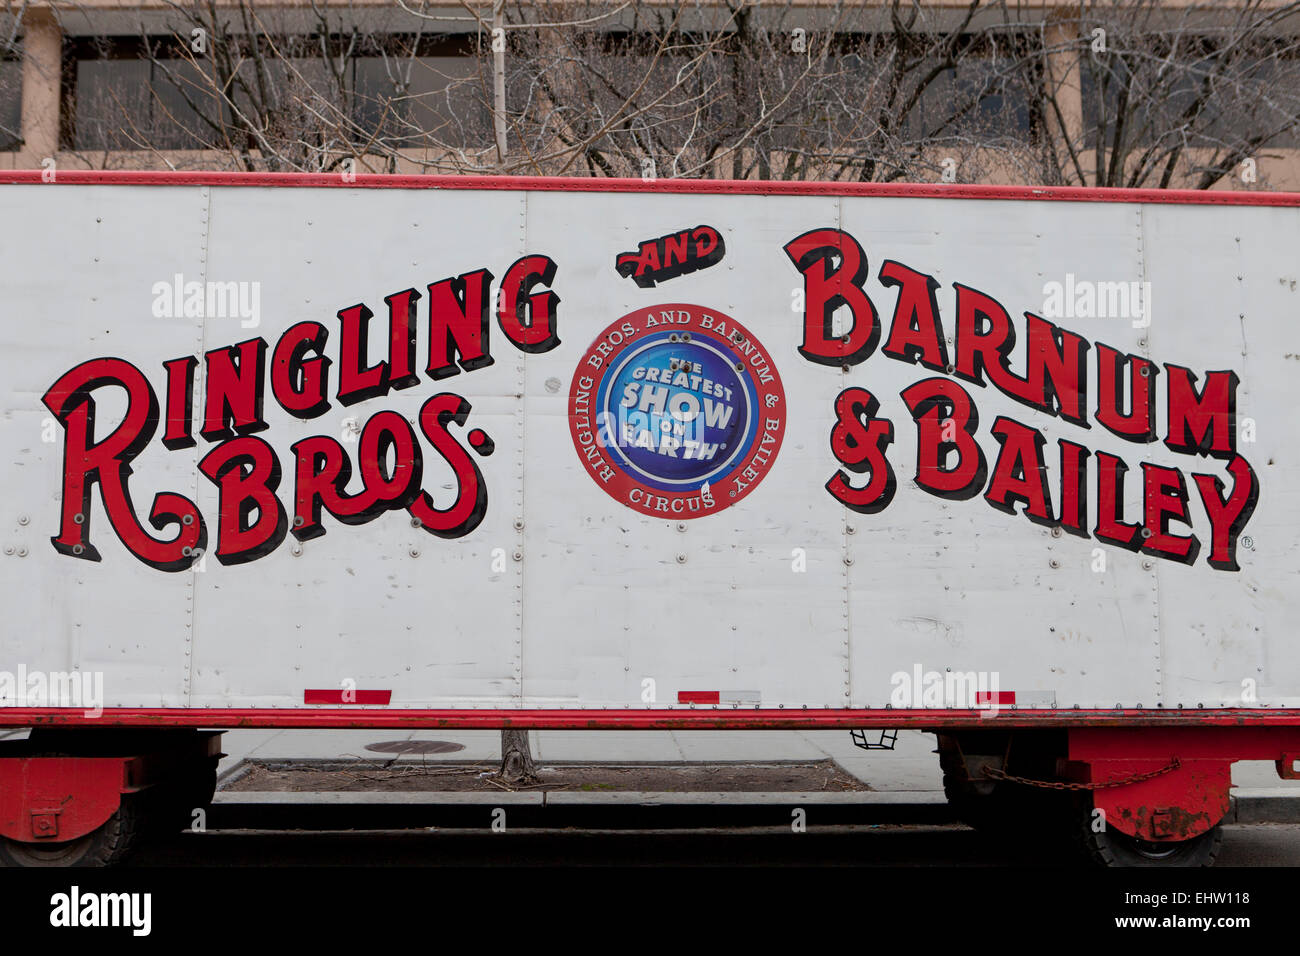 Ringling Bros and Barnum & Bailey circus sign - USA Stock Photo